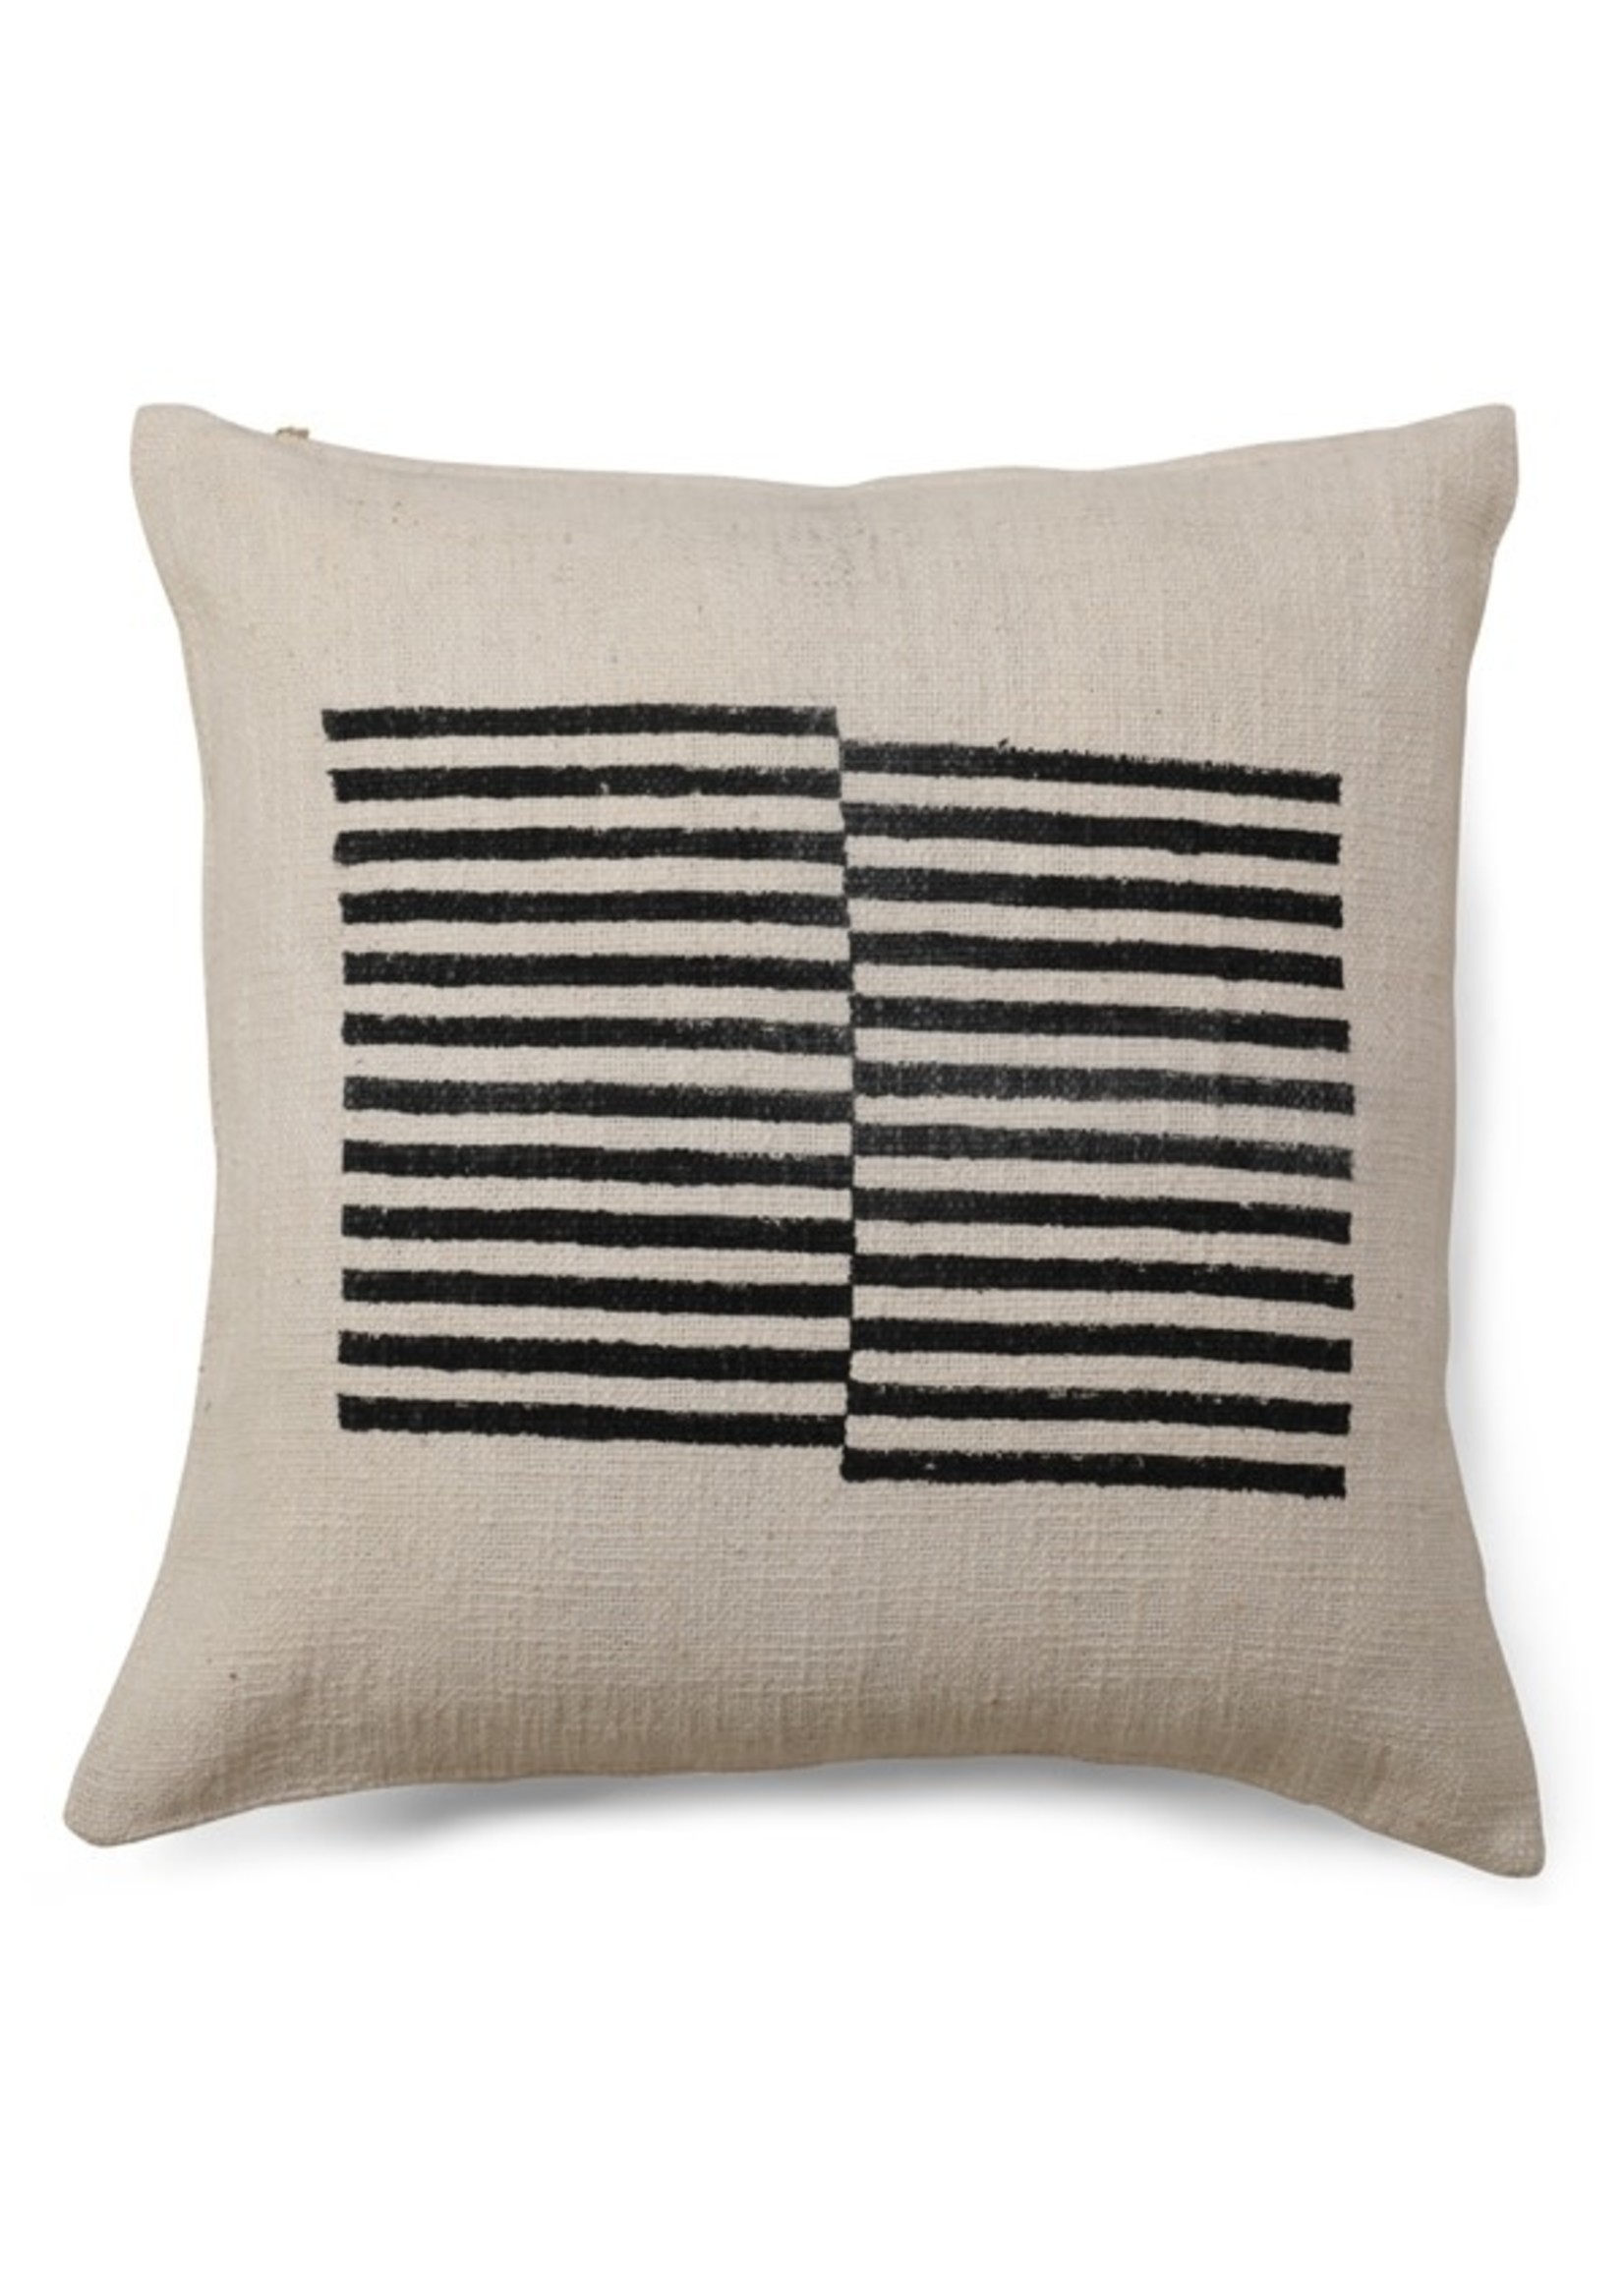 Celestial Stripe Pillow, Black - 18x18 inch